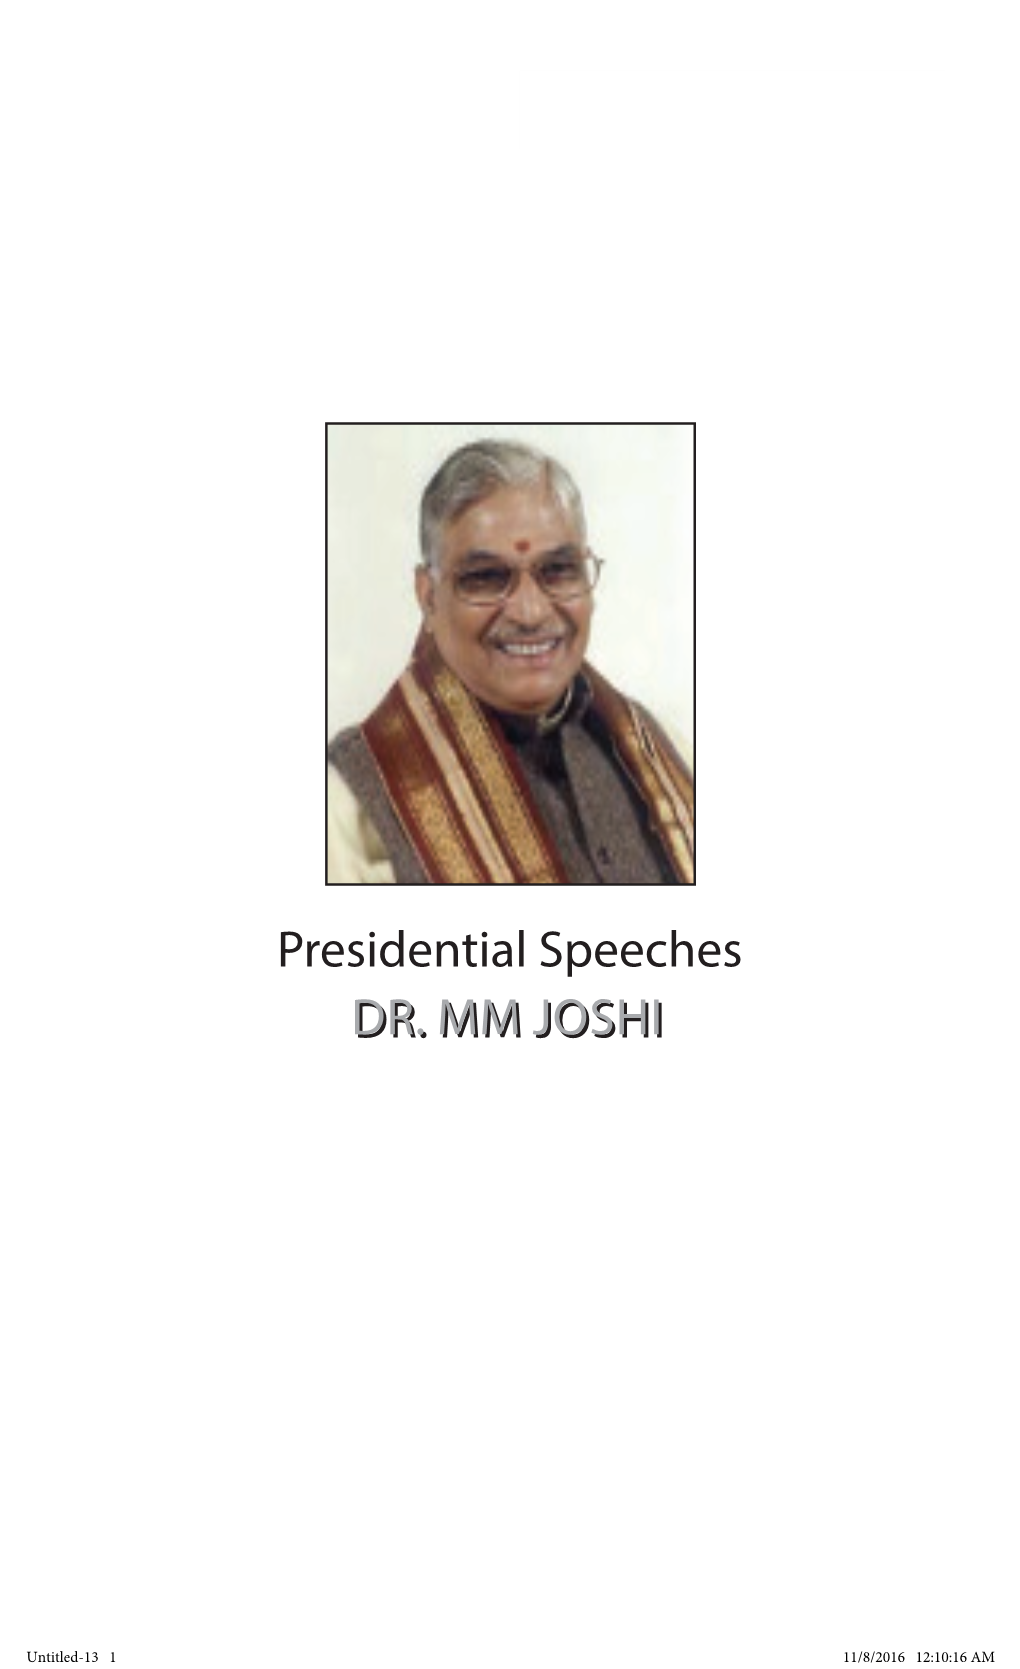 Presidential Speeches DR. MM JOSHI